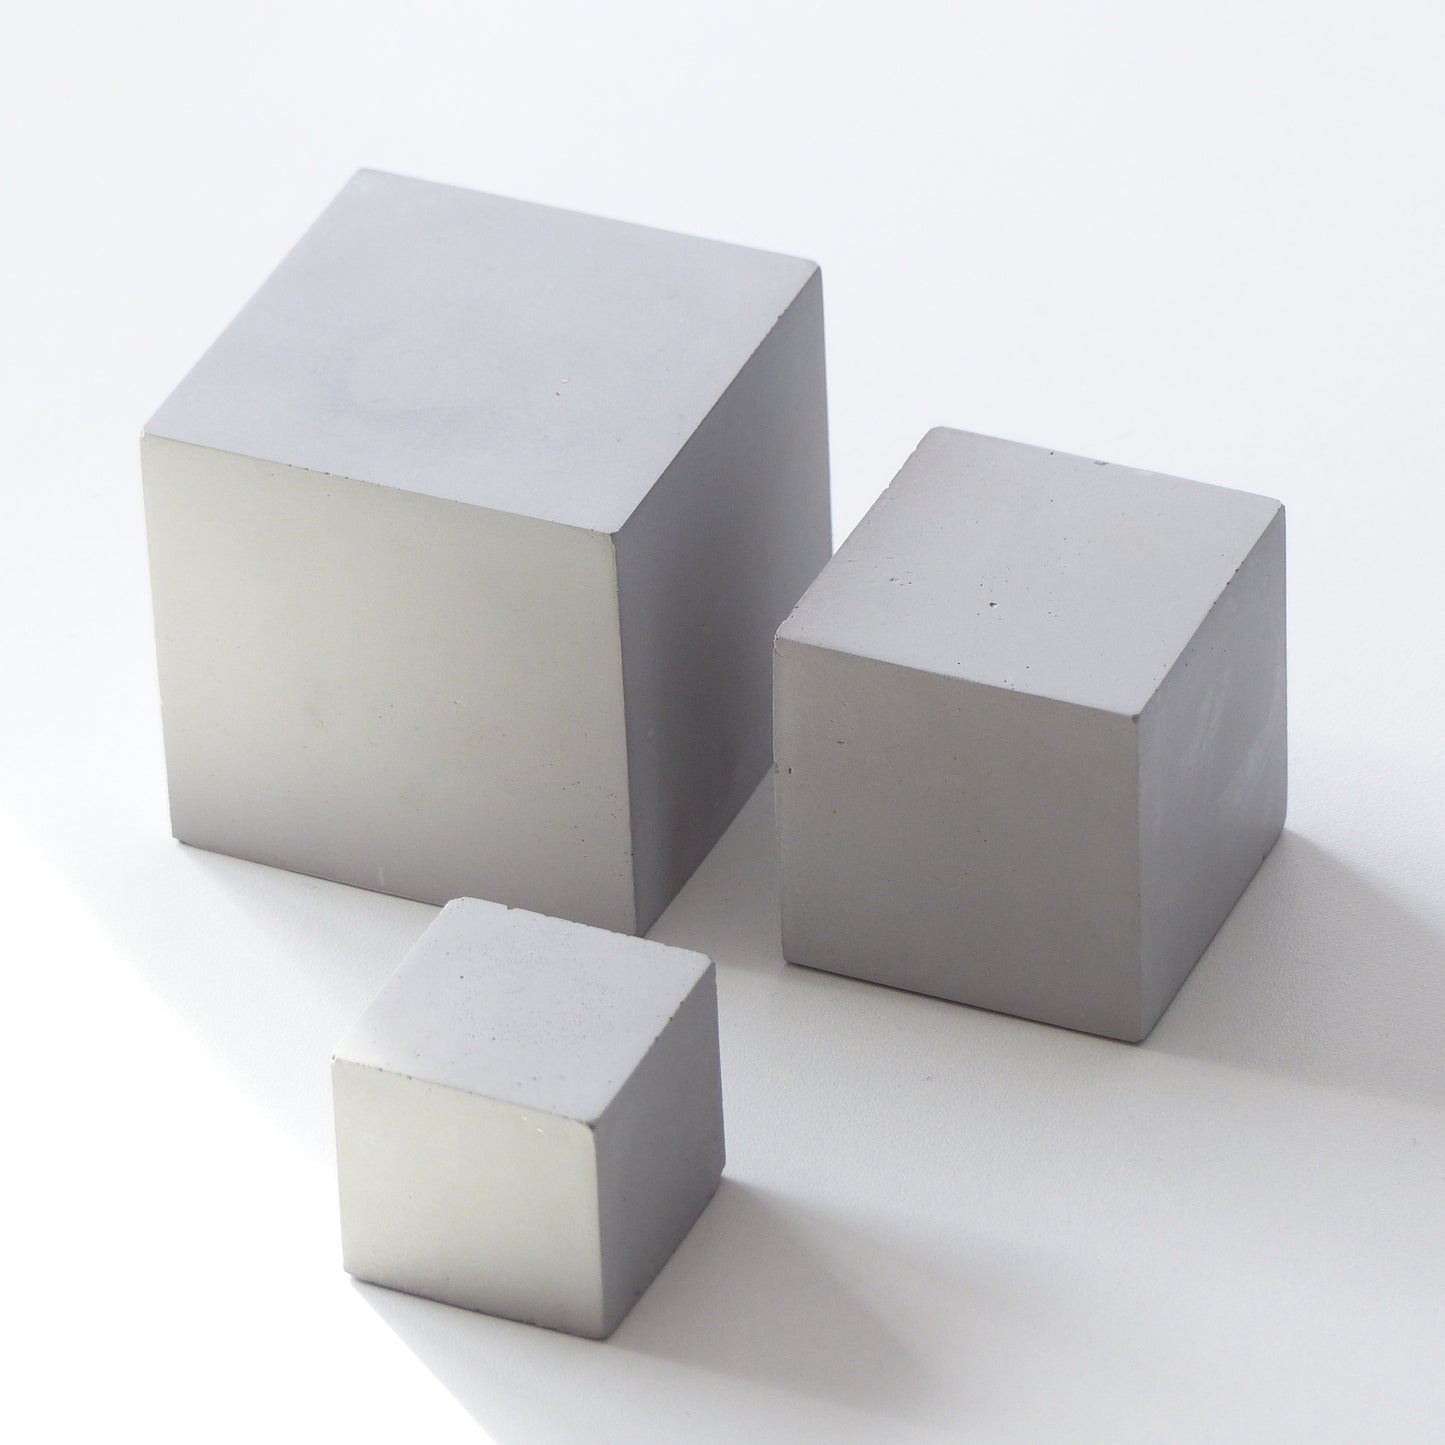 Three gray concrete cubes